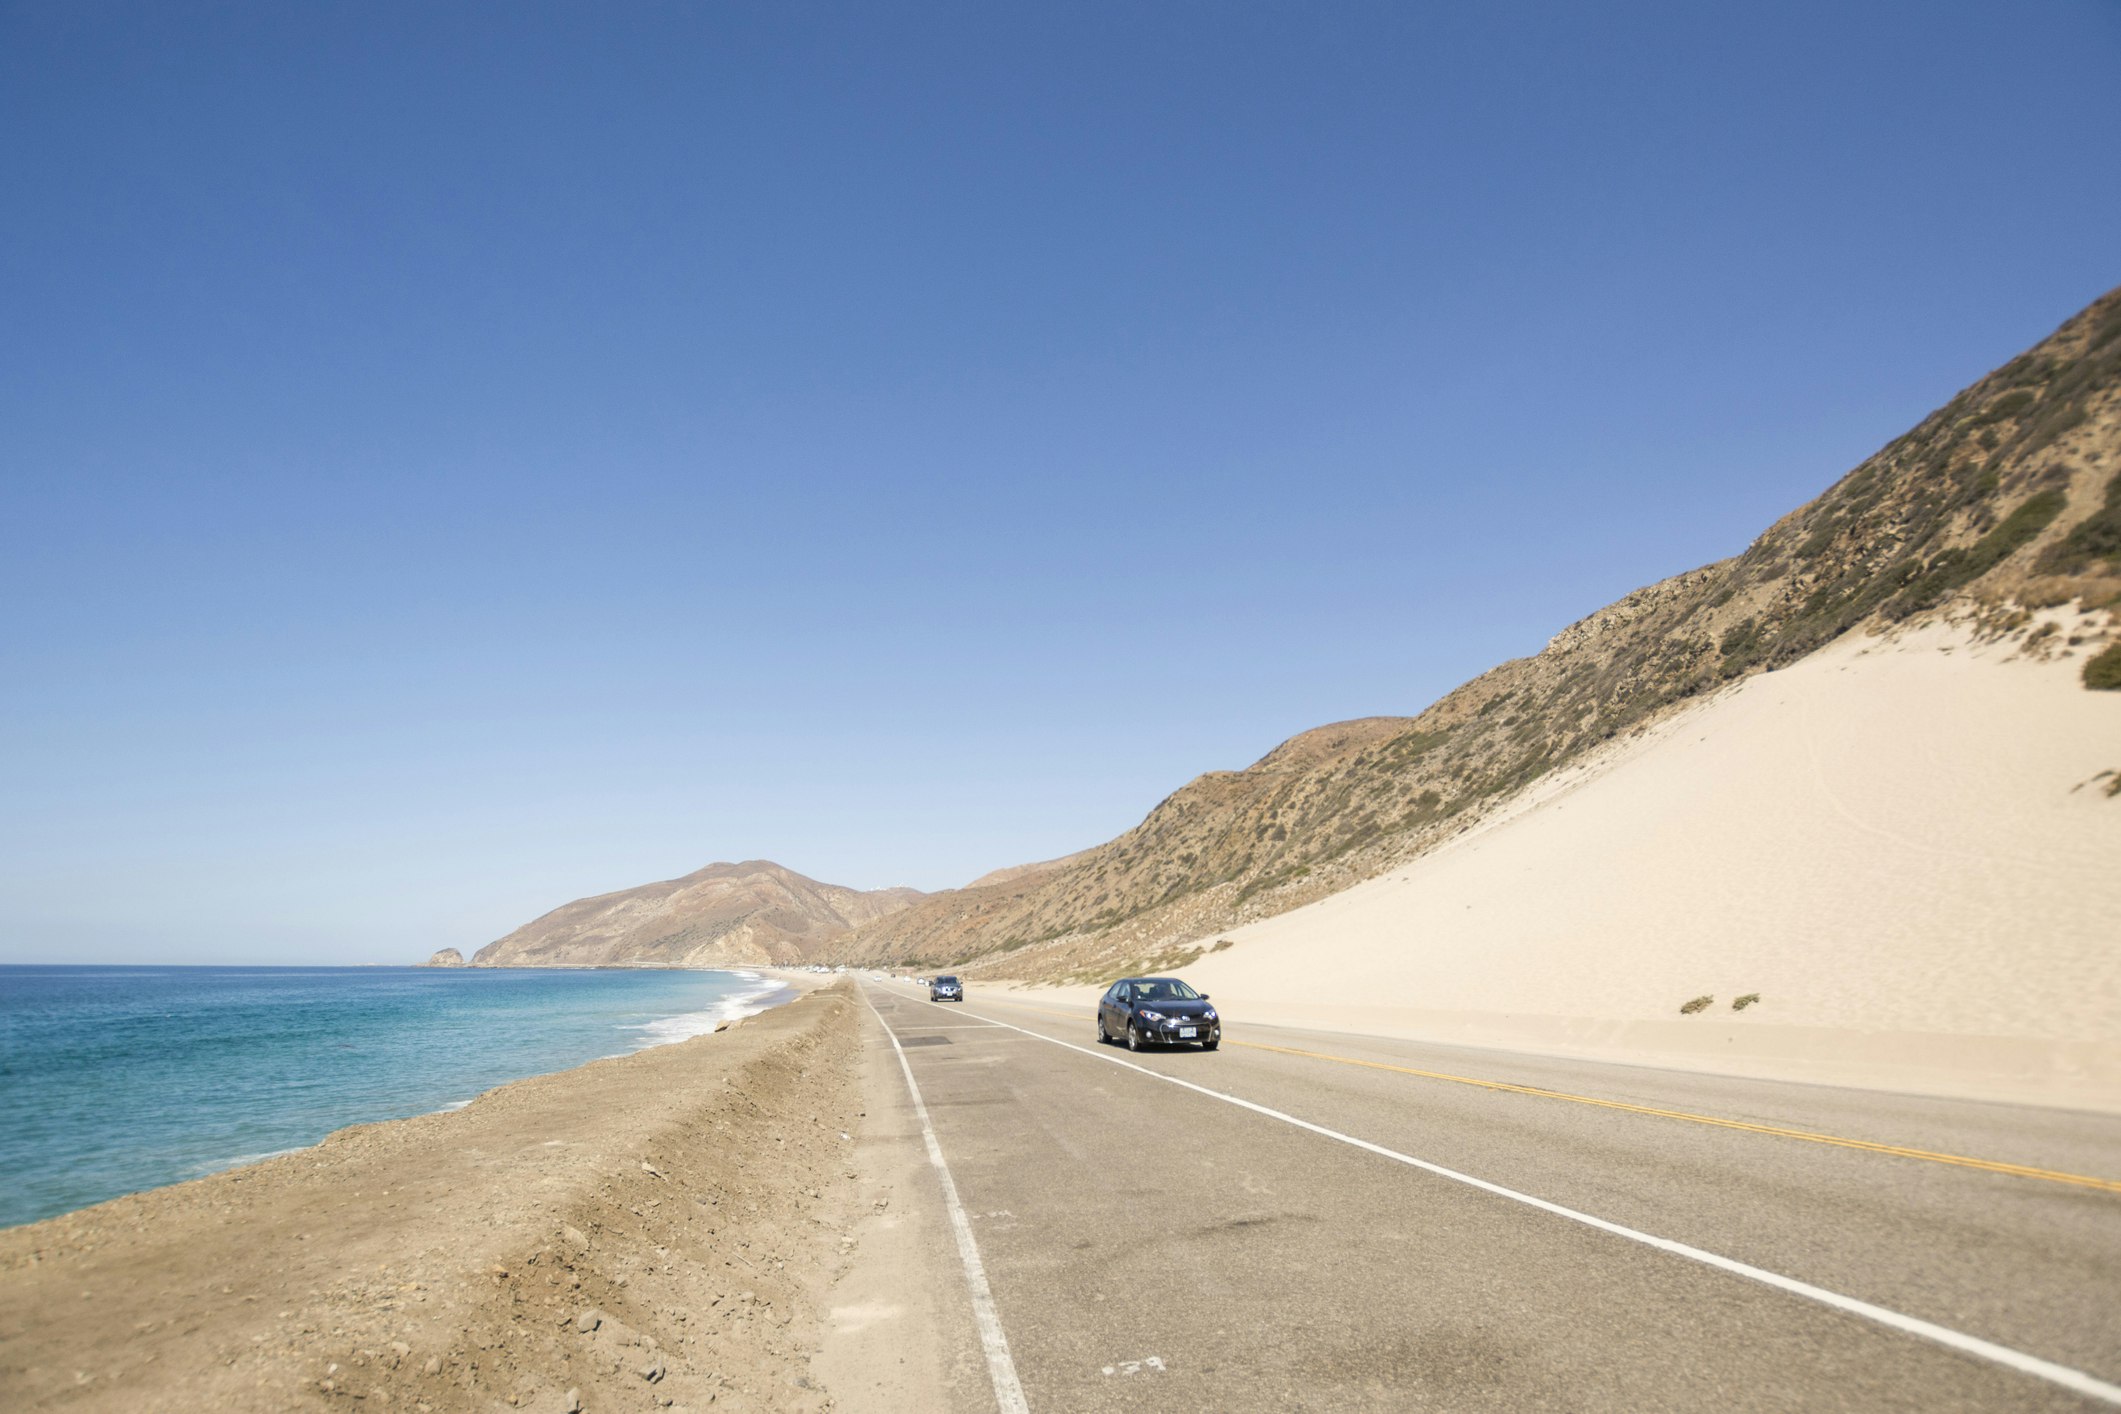 USA, Malibu, cars on Pacific Coast Highway